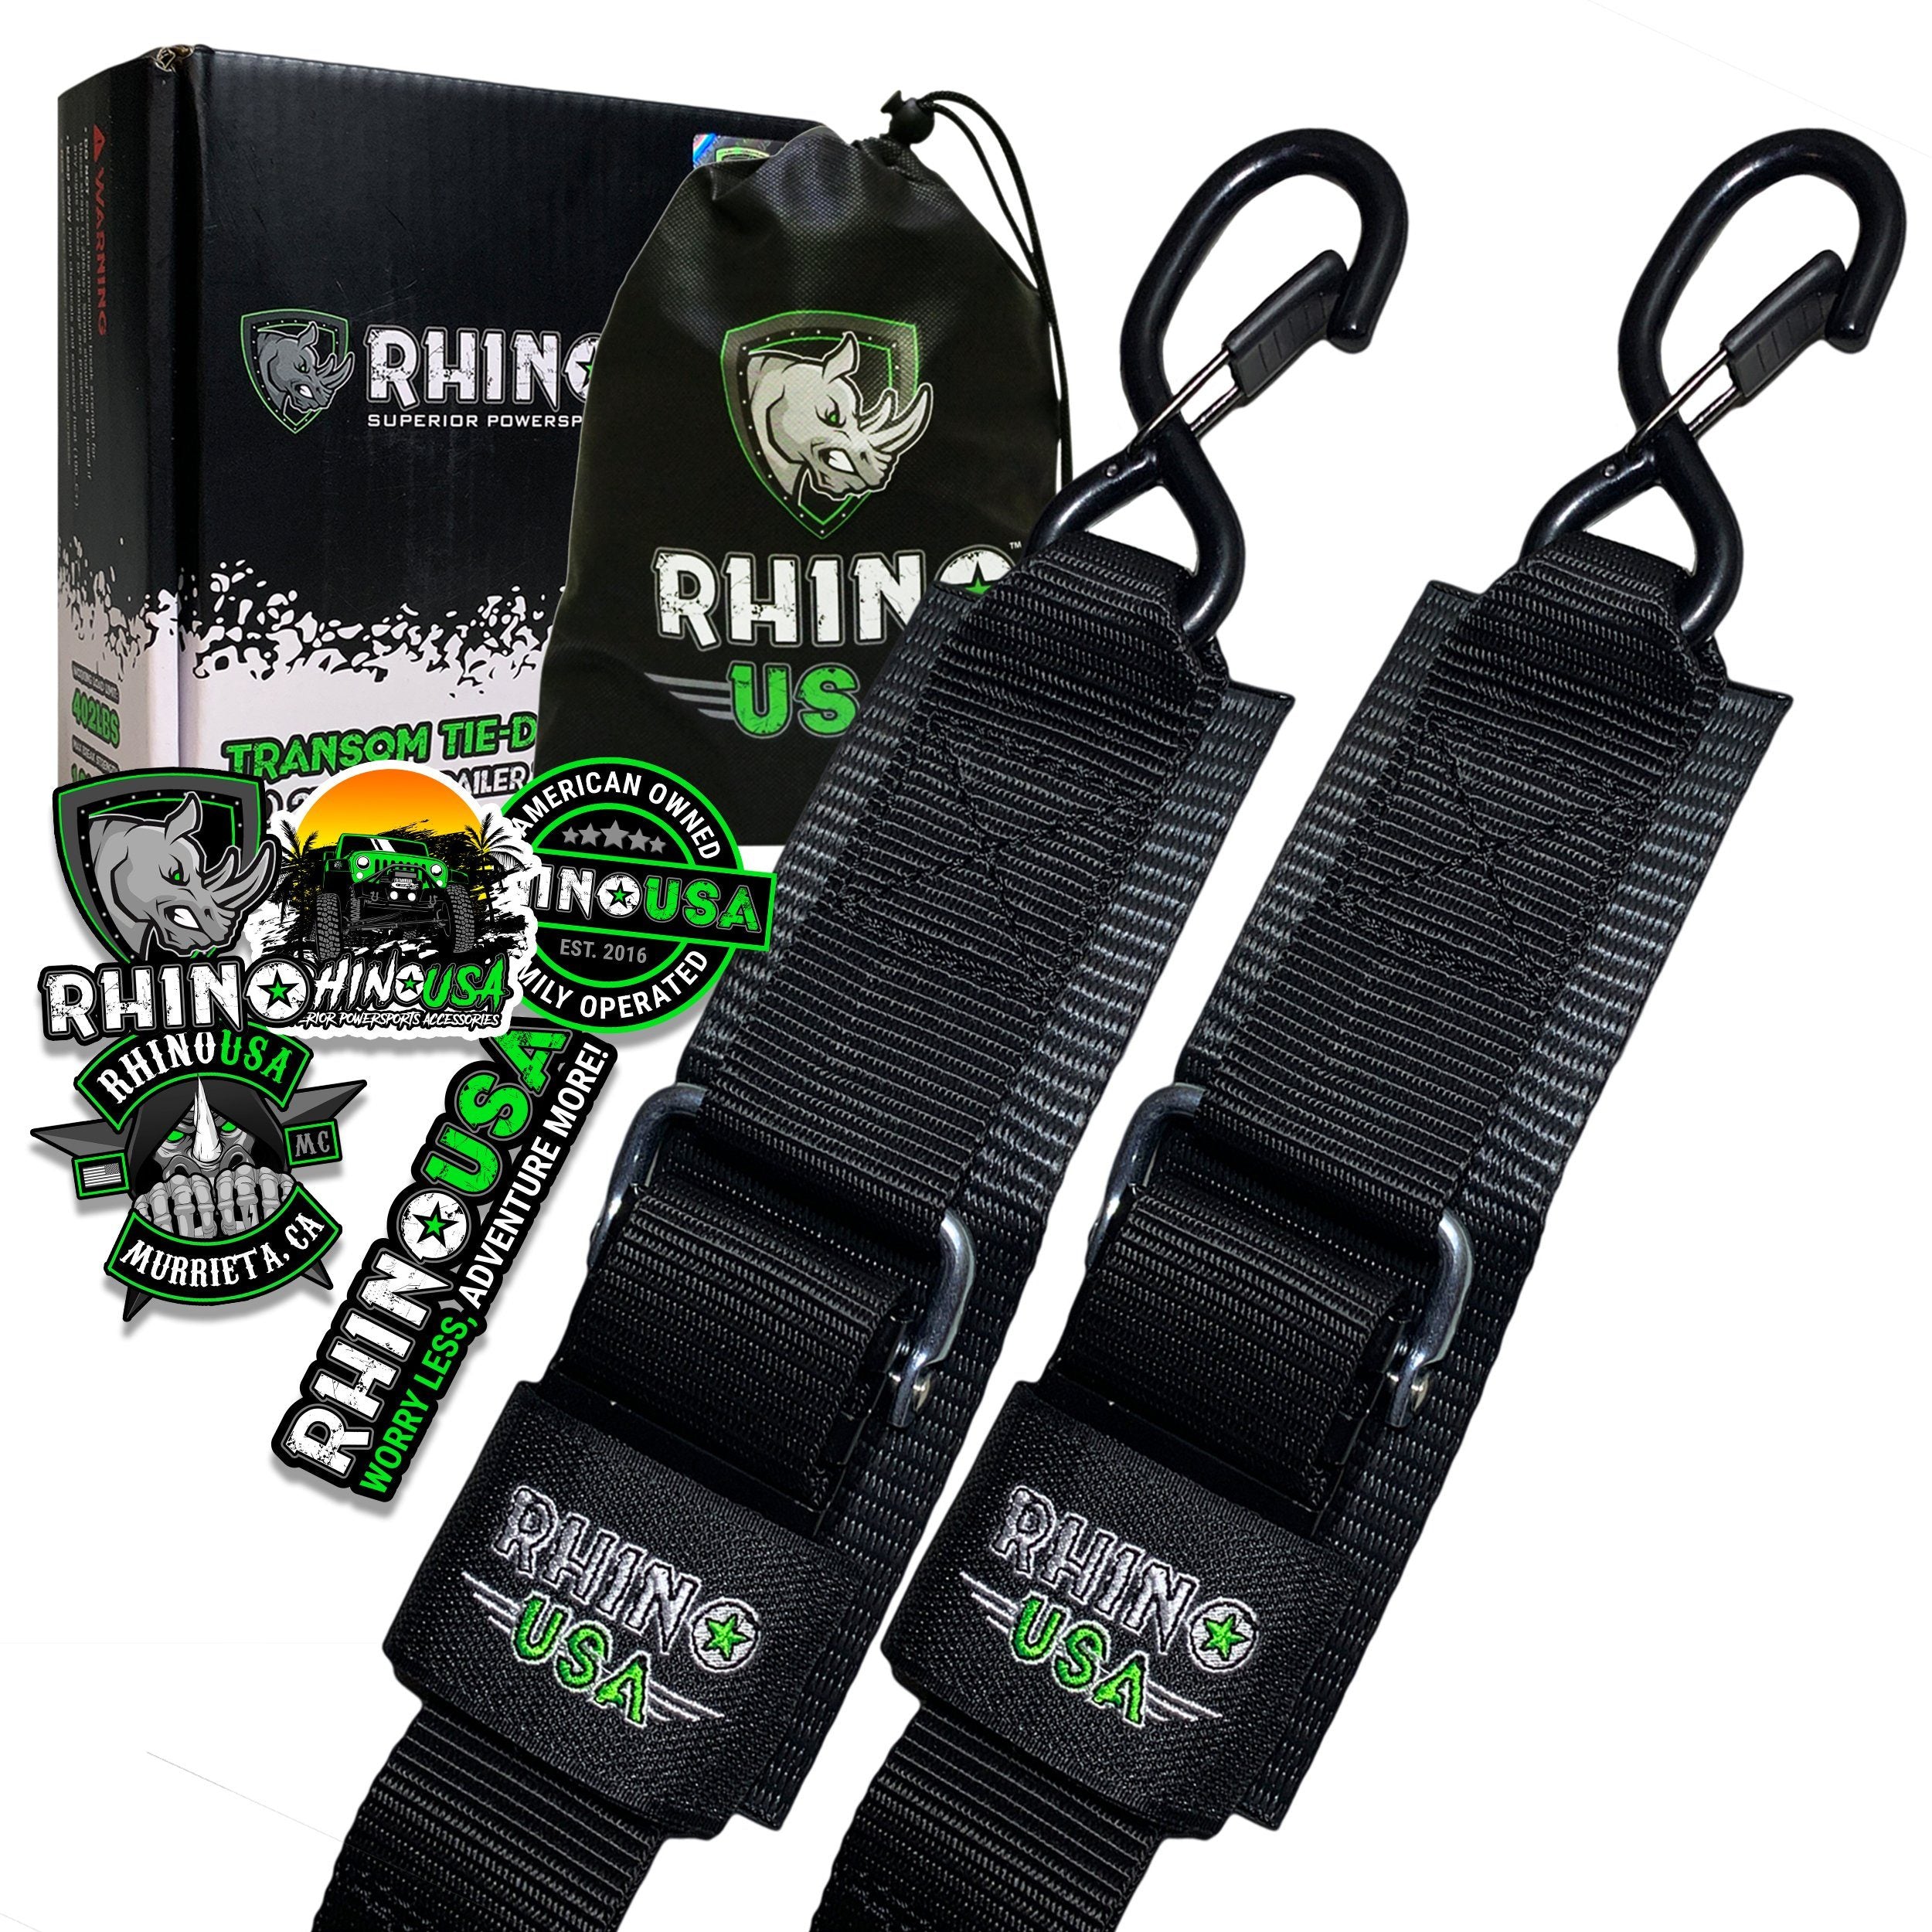 Rhino USA GMG-R1-4PACK - 1'' X 15' Ratchet Tie-Down Set (4-Pack)